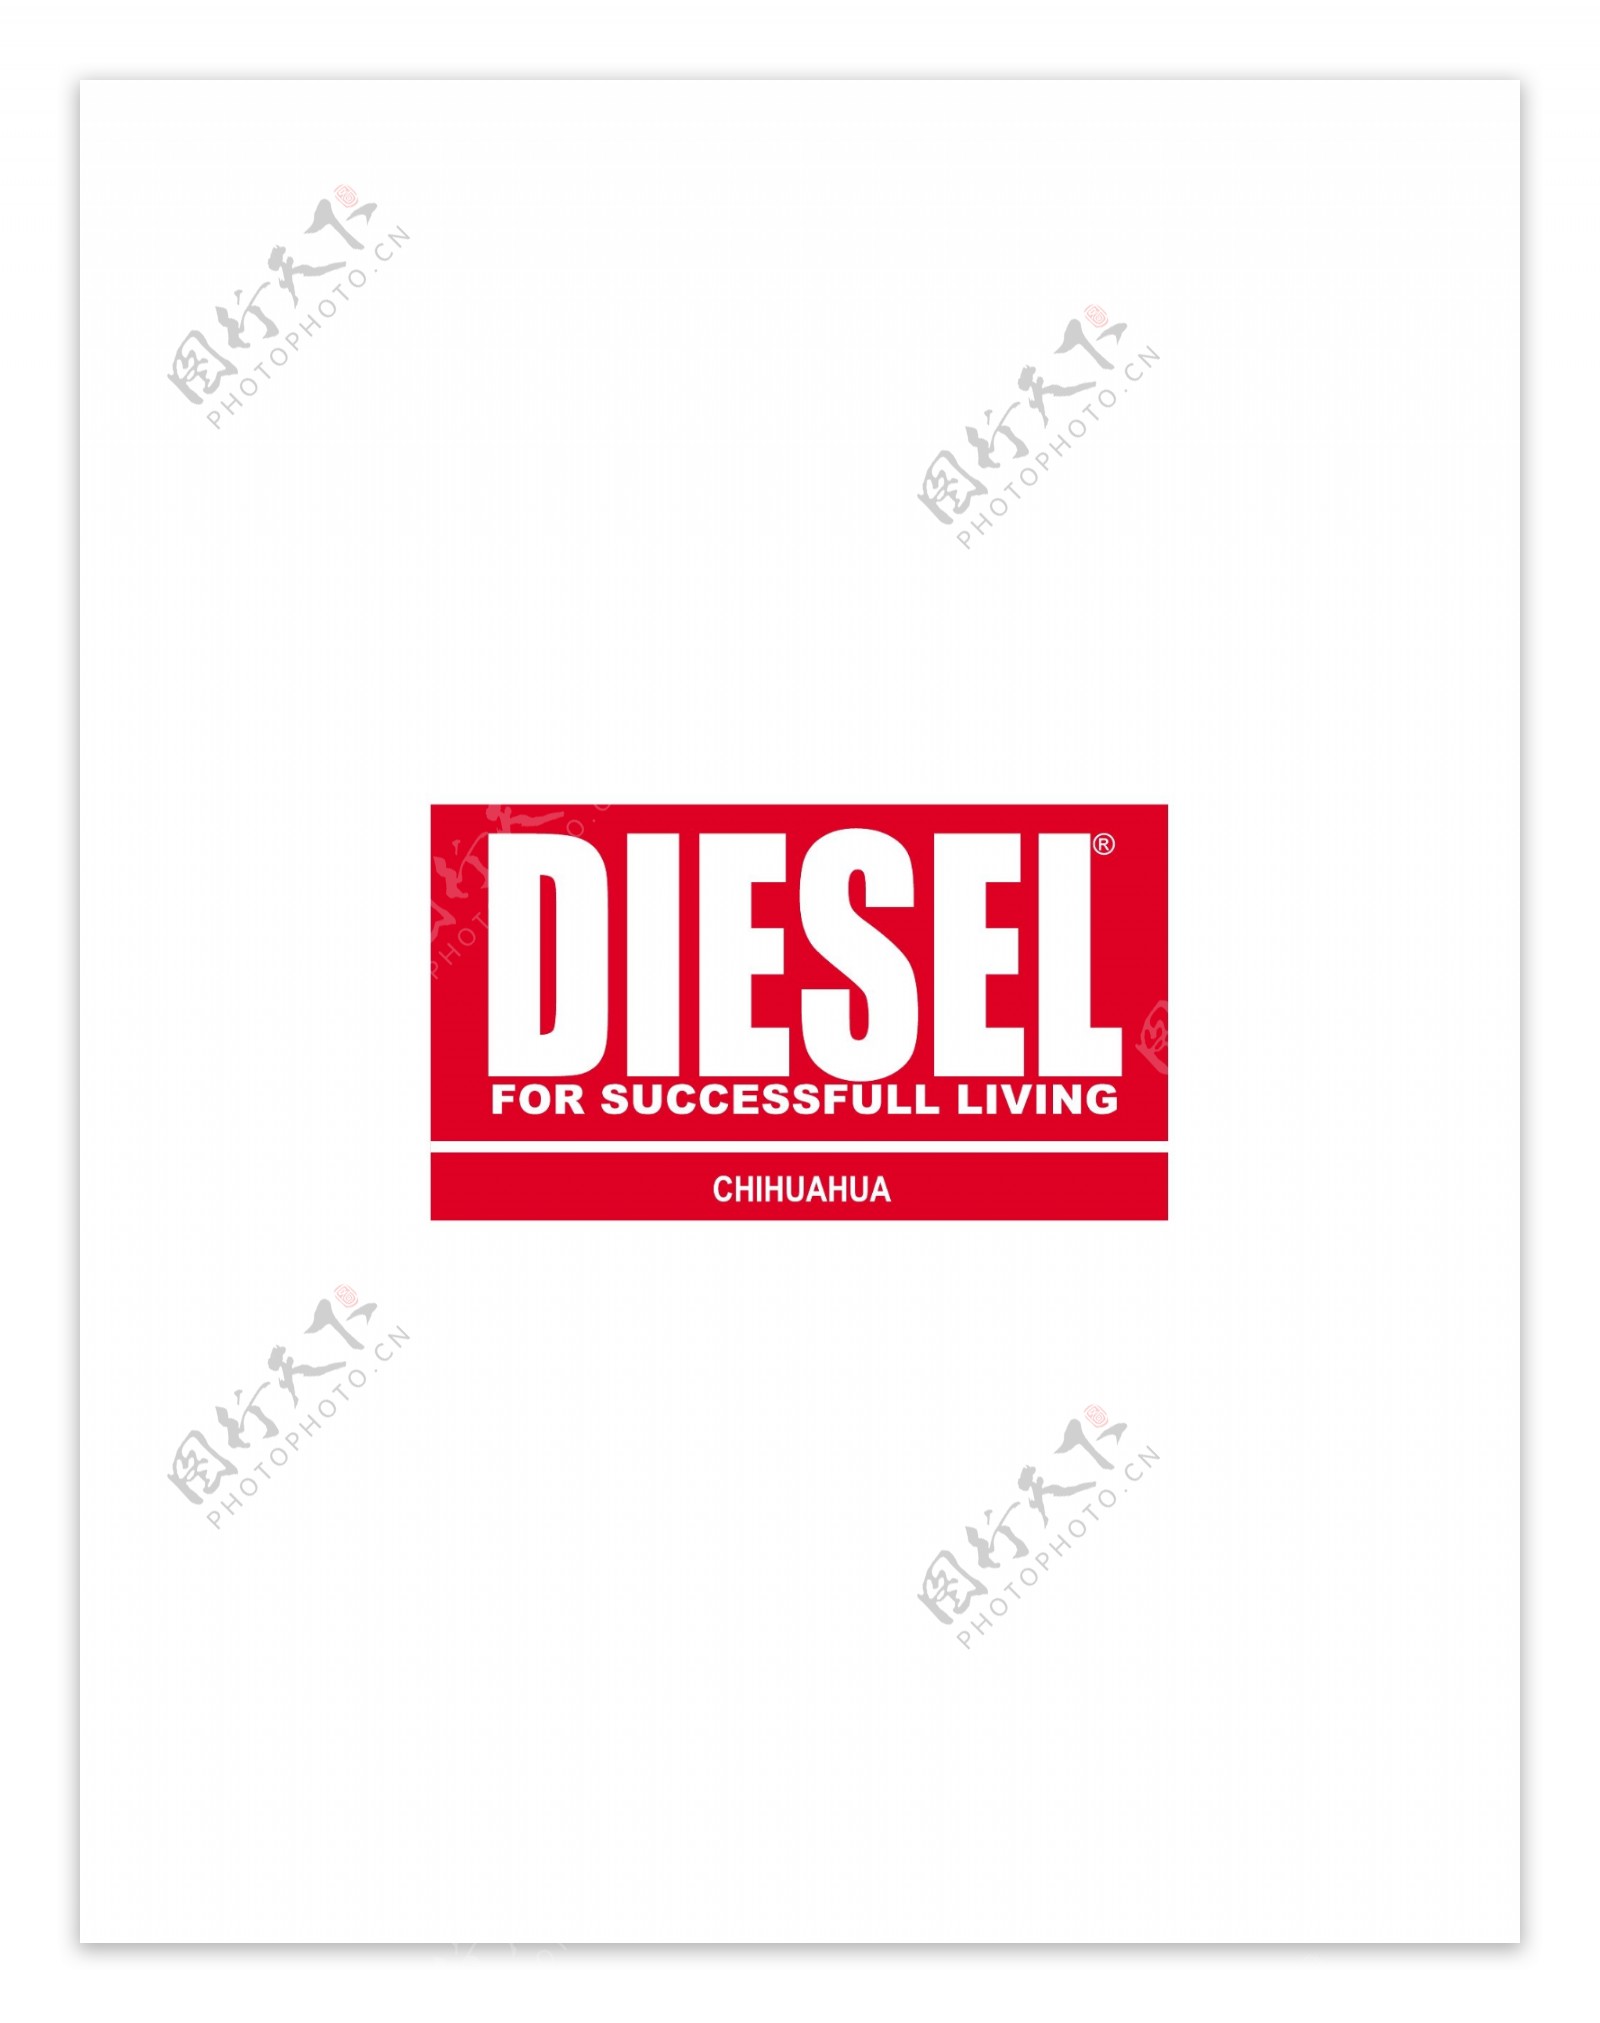 DieselClothingCologo设计欣赏DieselClothingCo服饰品牌标志下载标志设计欣赏